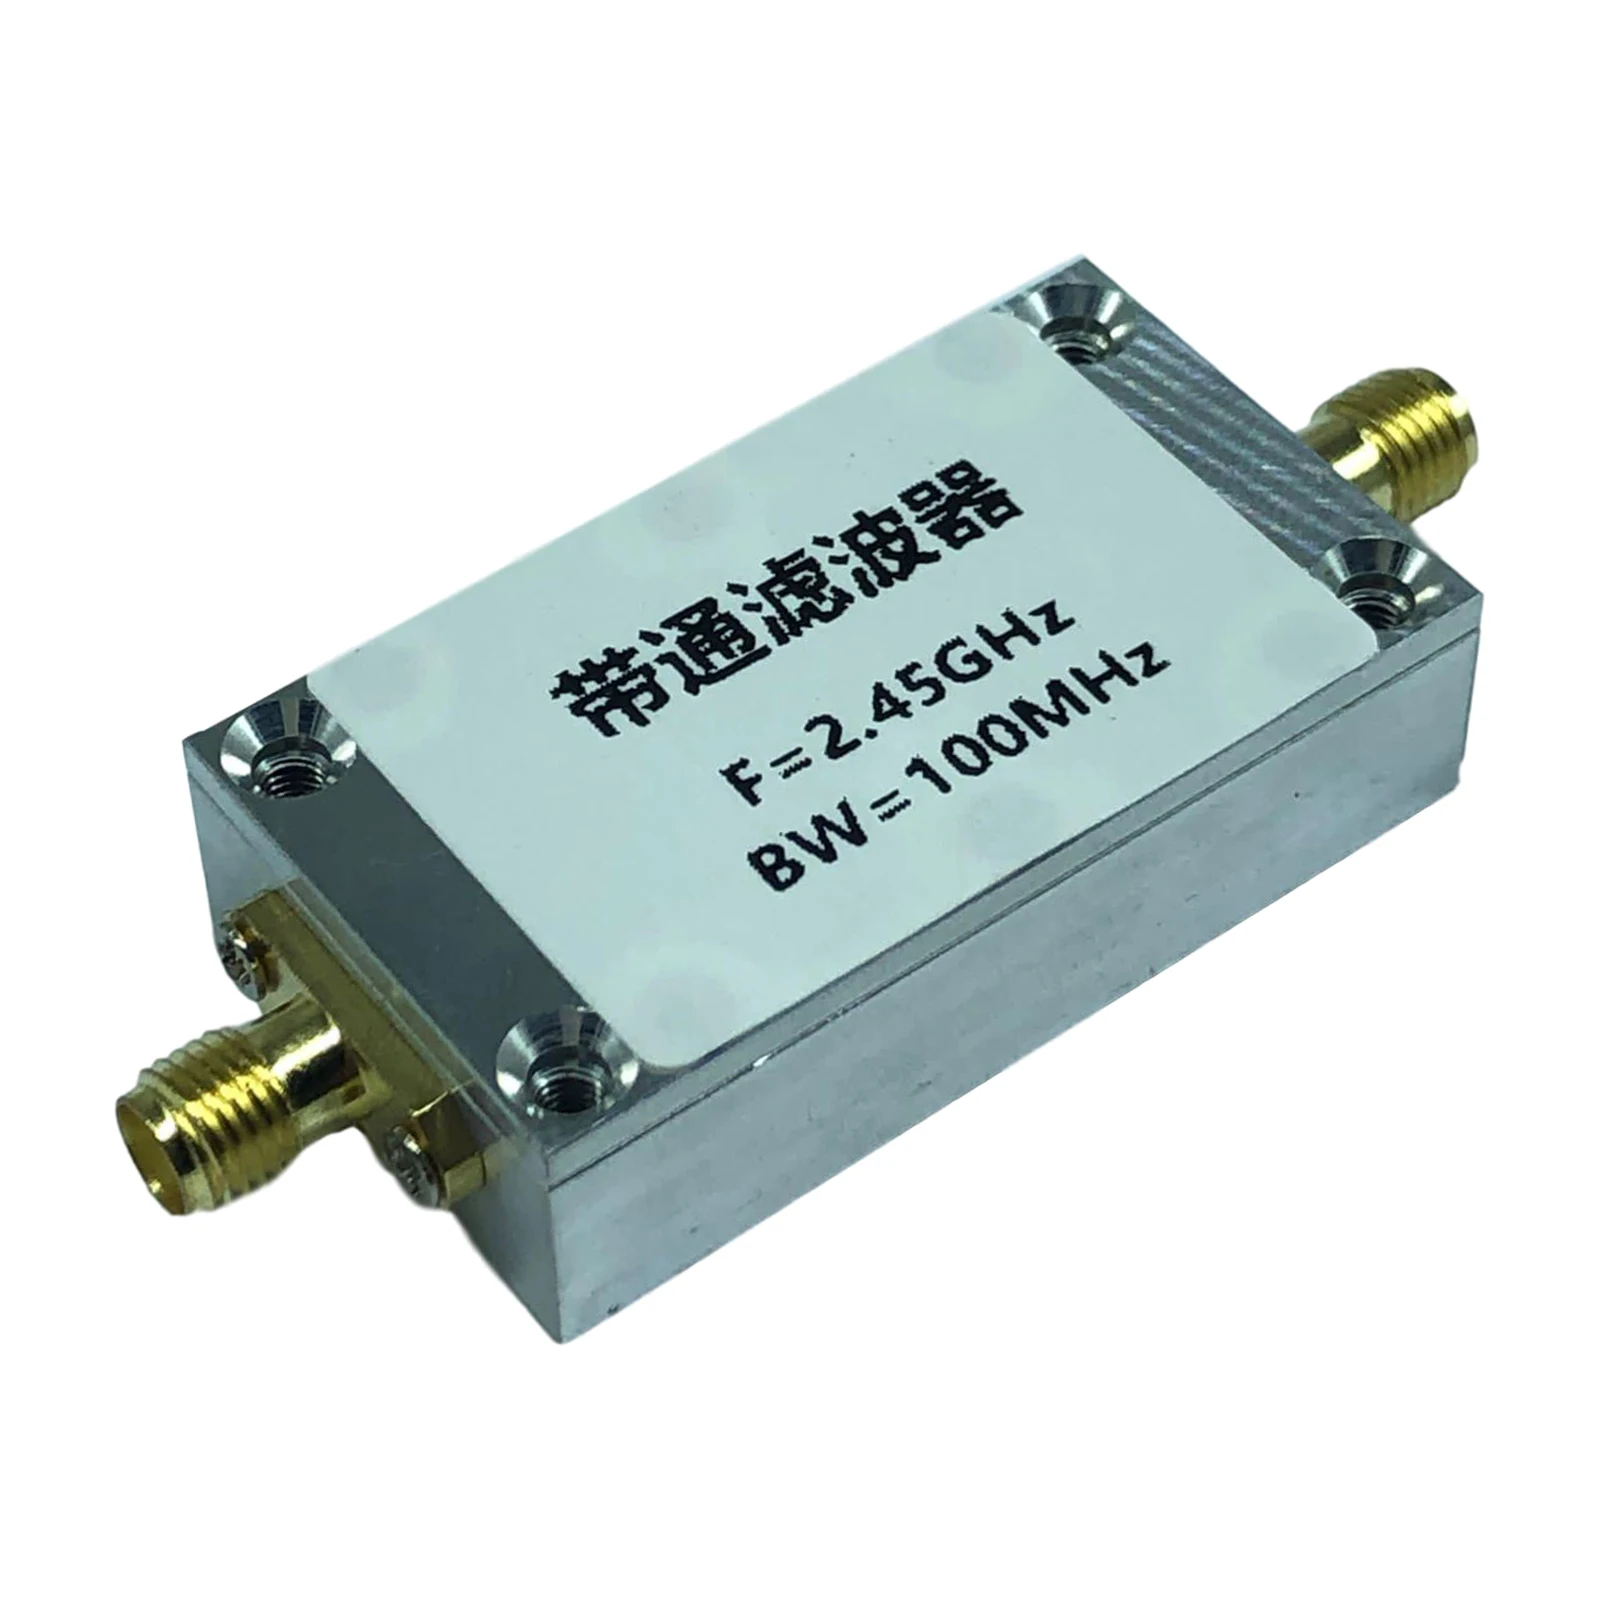 2.4G 2450MHz Band-pass Bandpass Filter WiFi Zigbee anti-jamming 45x25x12mm, Alloy Case